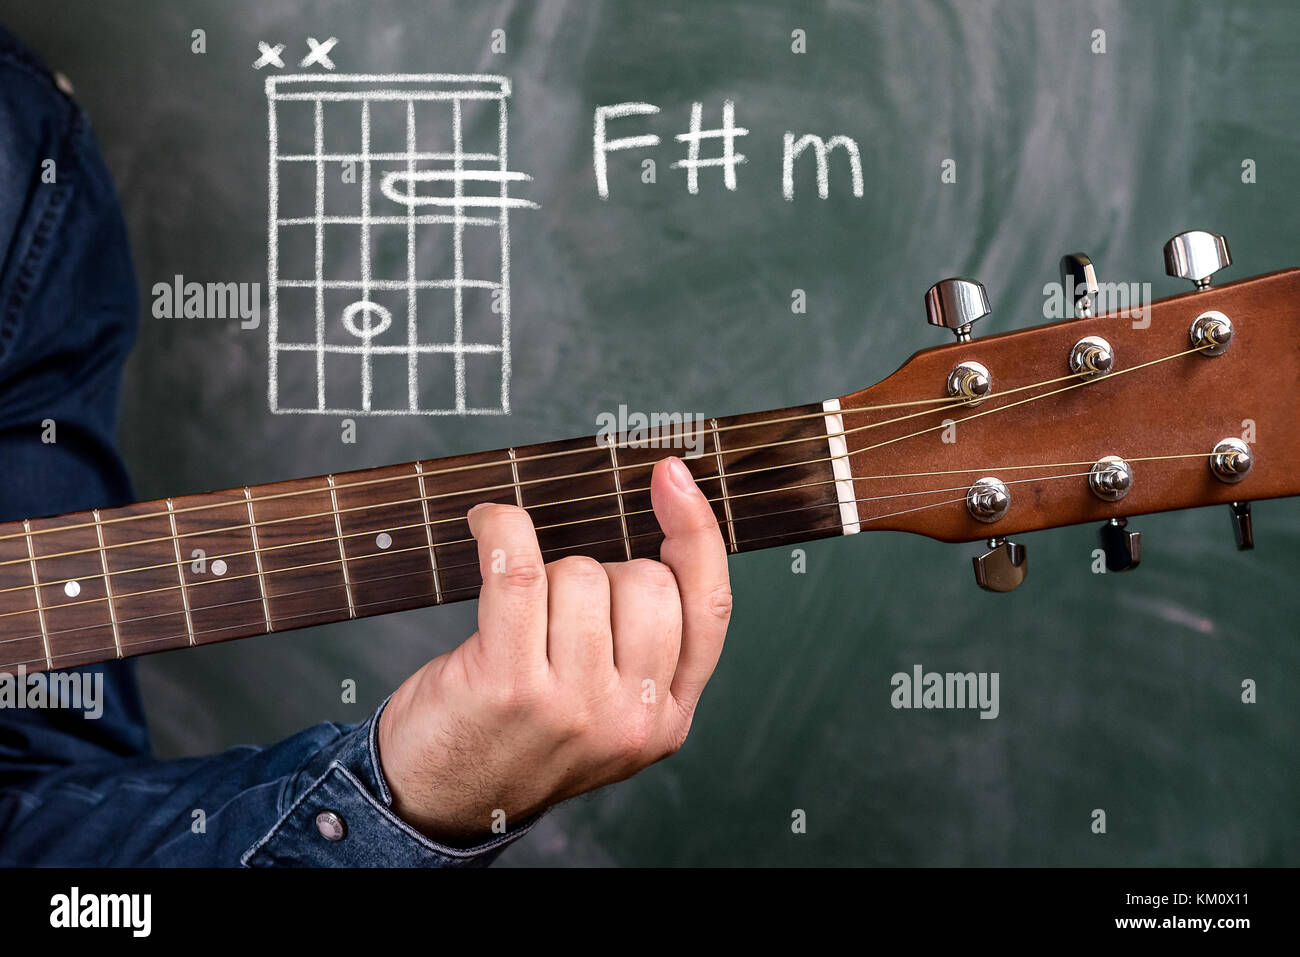 Man in a blue denim shirt playing guitar chords displayed on a blackboard,  Chord F Sharp m Stock Photo - Alamy